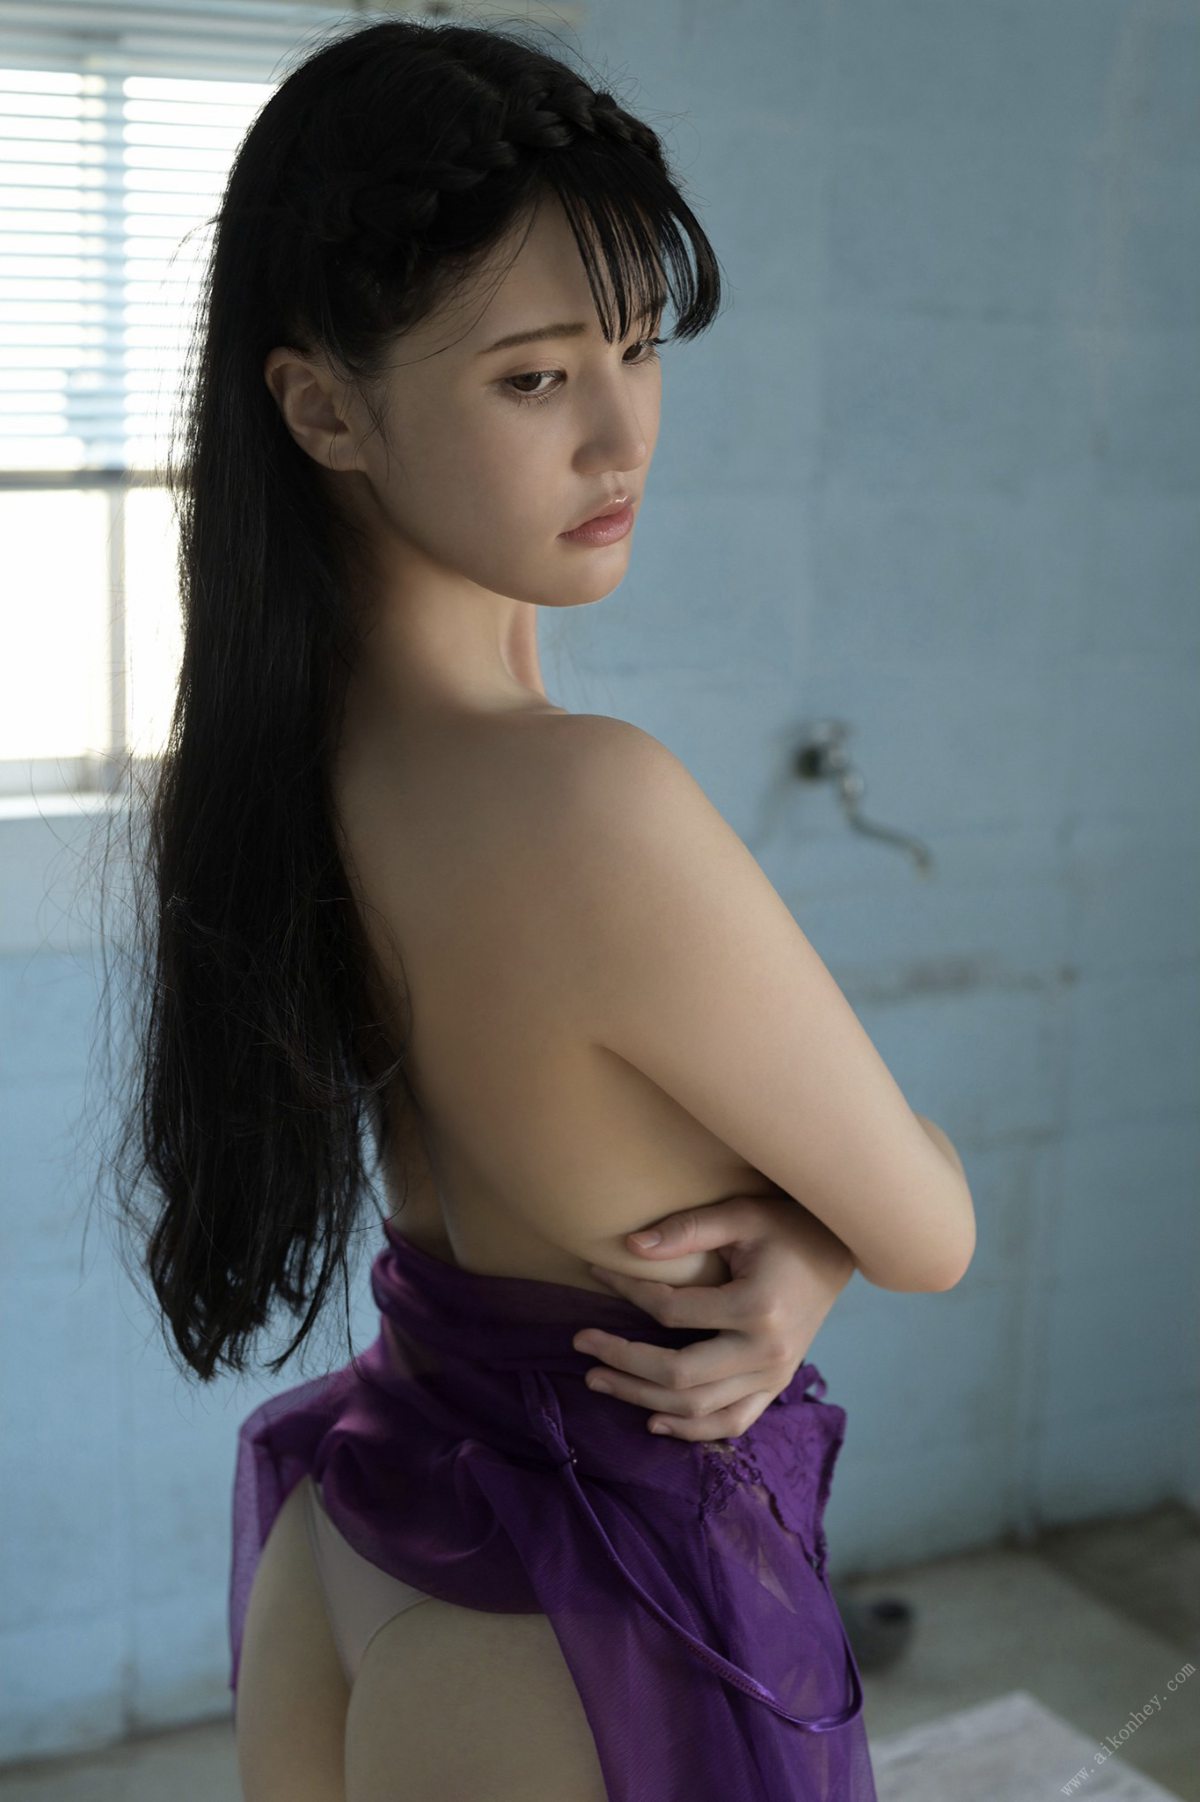 FRIDAY Digital Photobook Shoko Takahashi 高橋しょう子 G milk paradise Vol 3 Ｇ乳パラダイス Vol 3 2020 12 25 0028 4670201706.jpg